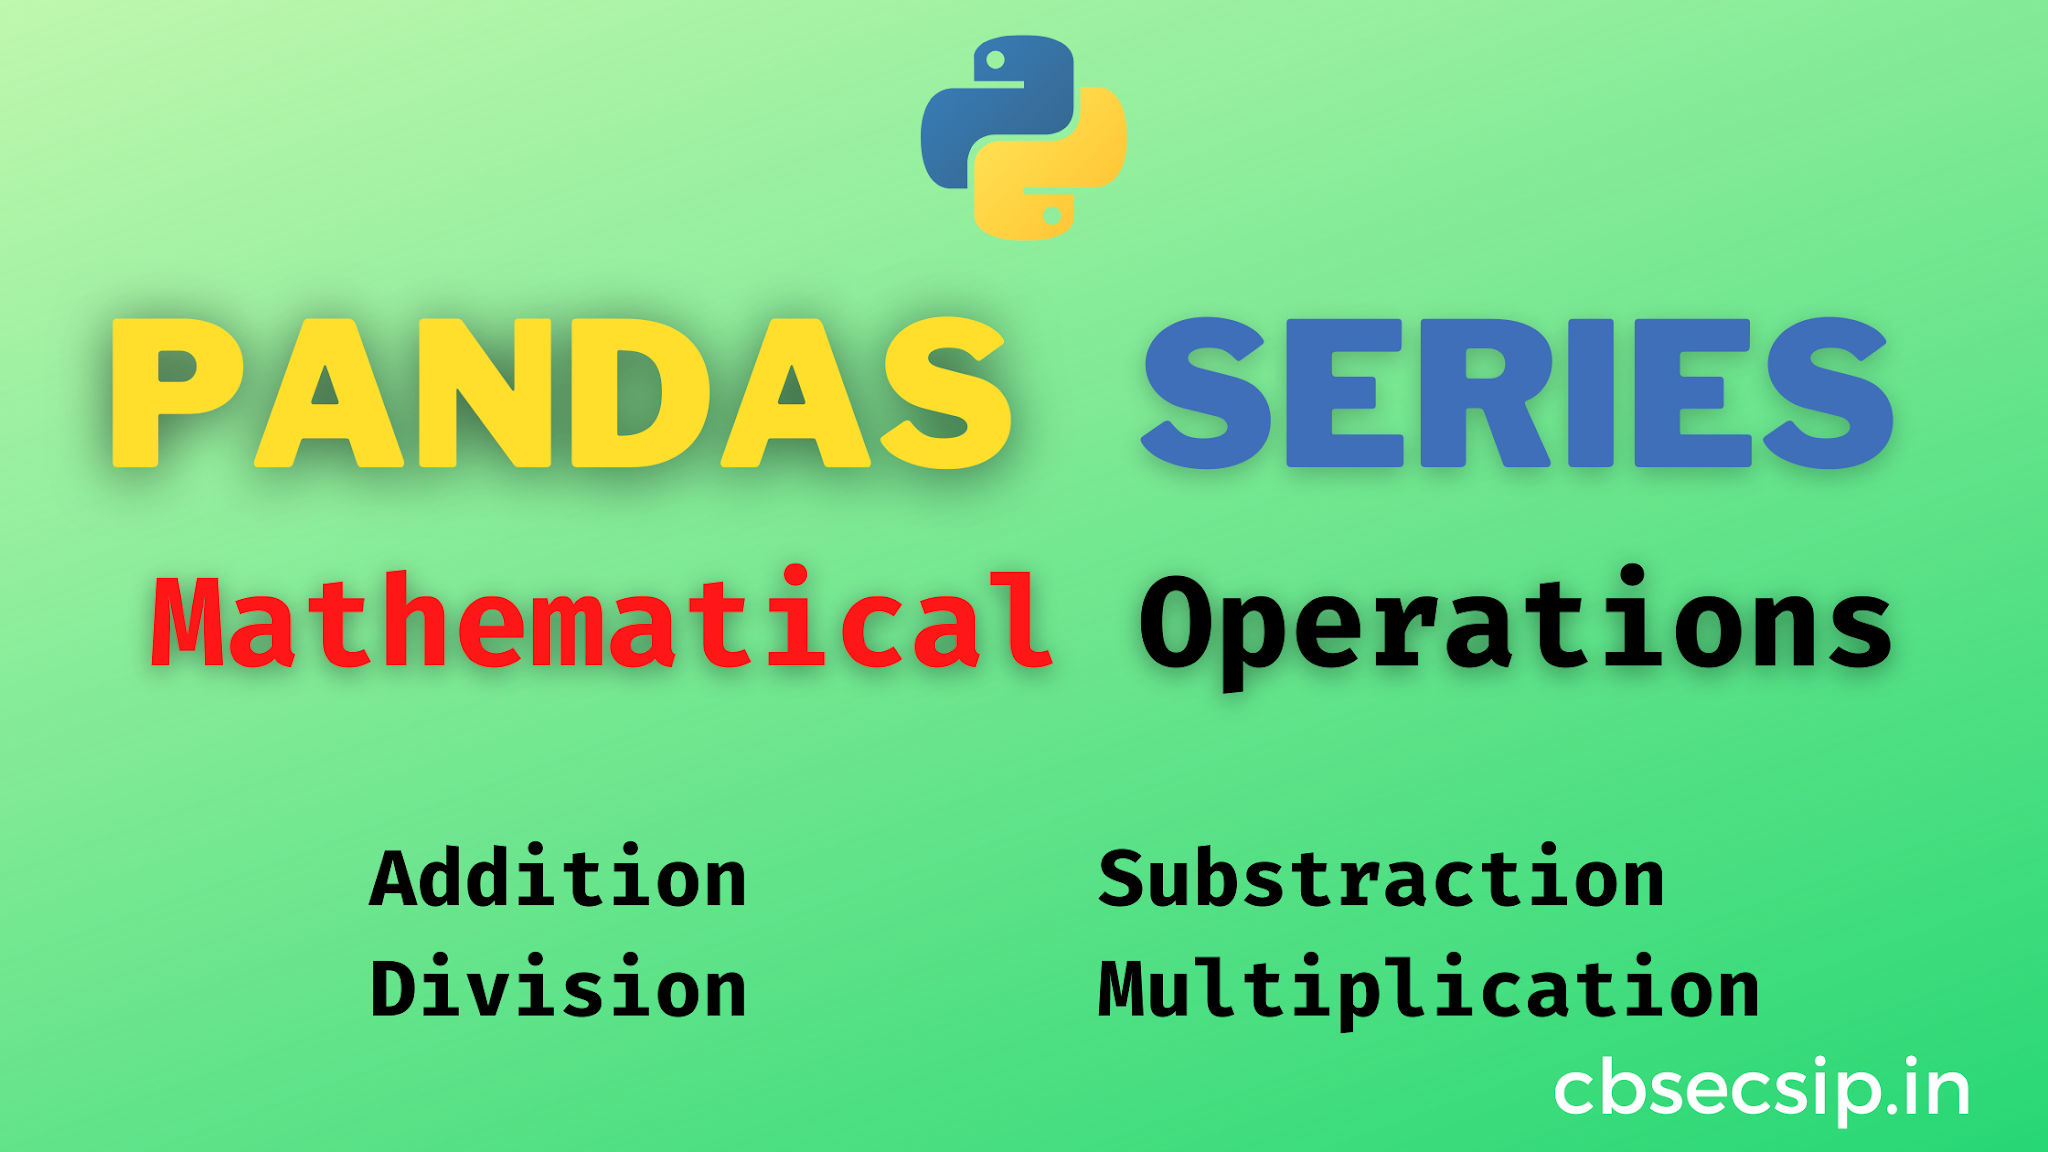 Mathematical operations on Pandas Series